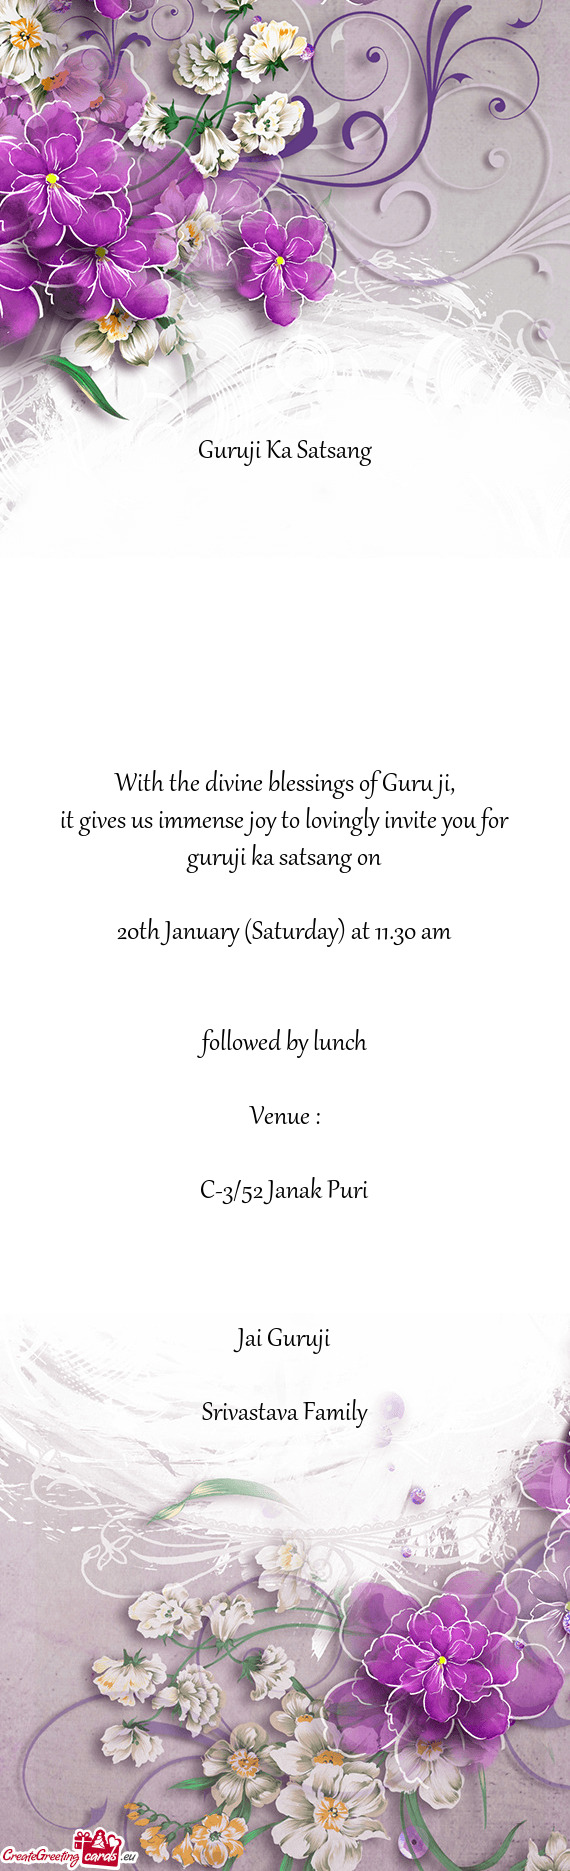 It gives us immense joy to lovingly invite you for guruji ka satsang on